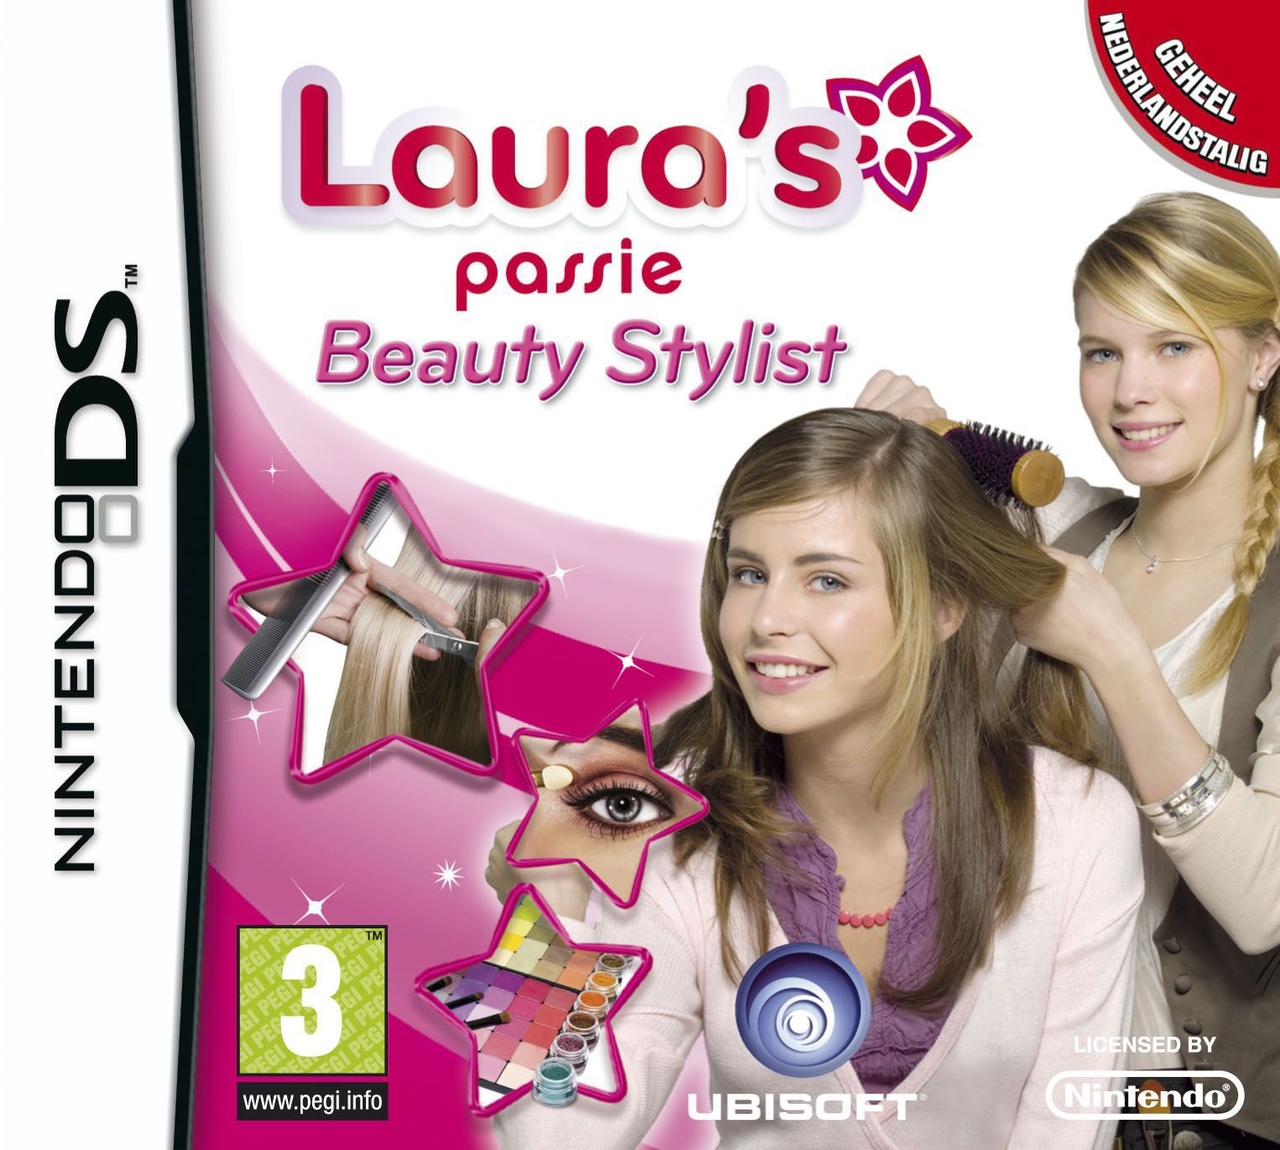 Laura's Passie Beauty Stylist - Nintendo DS Games